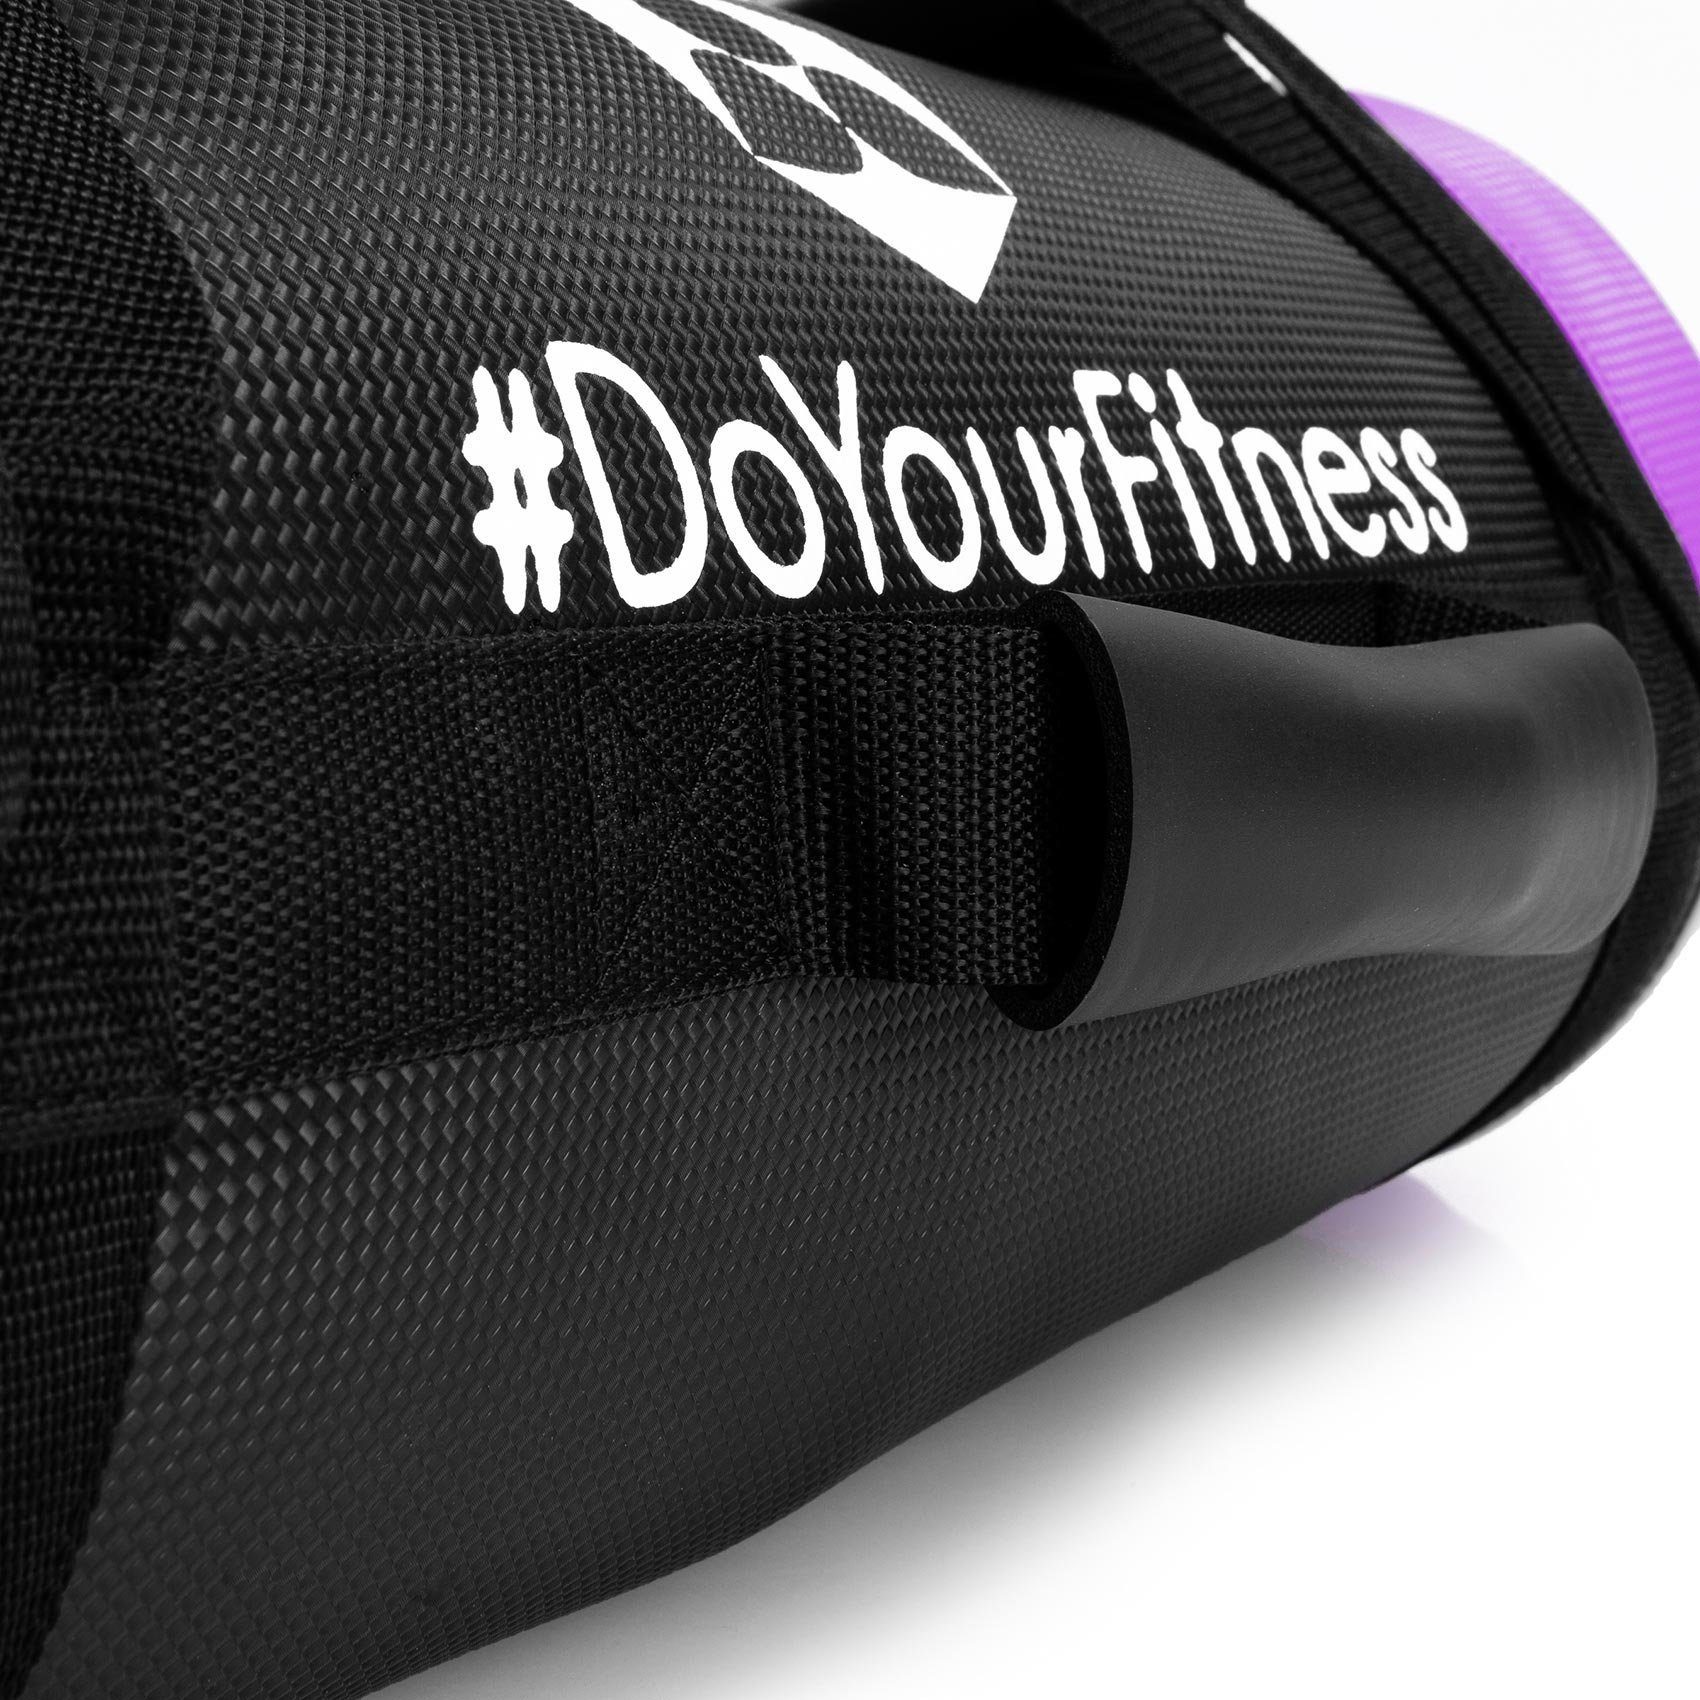 Gewichtssack »Carolous« #DoYourSports x Bag World Fitness Power #DoYourFitness